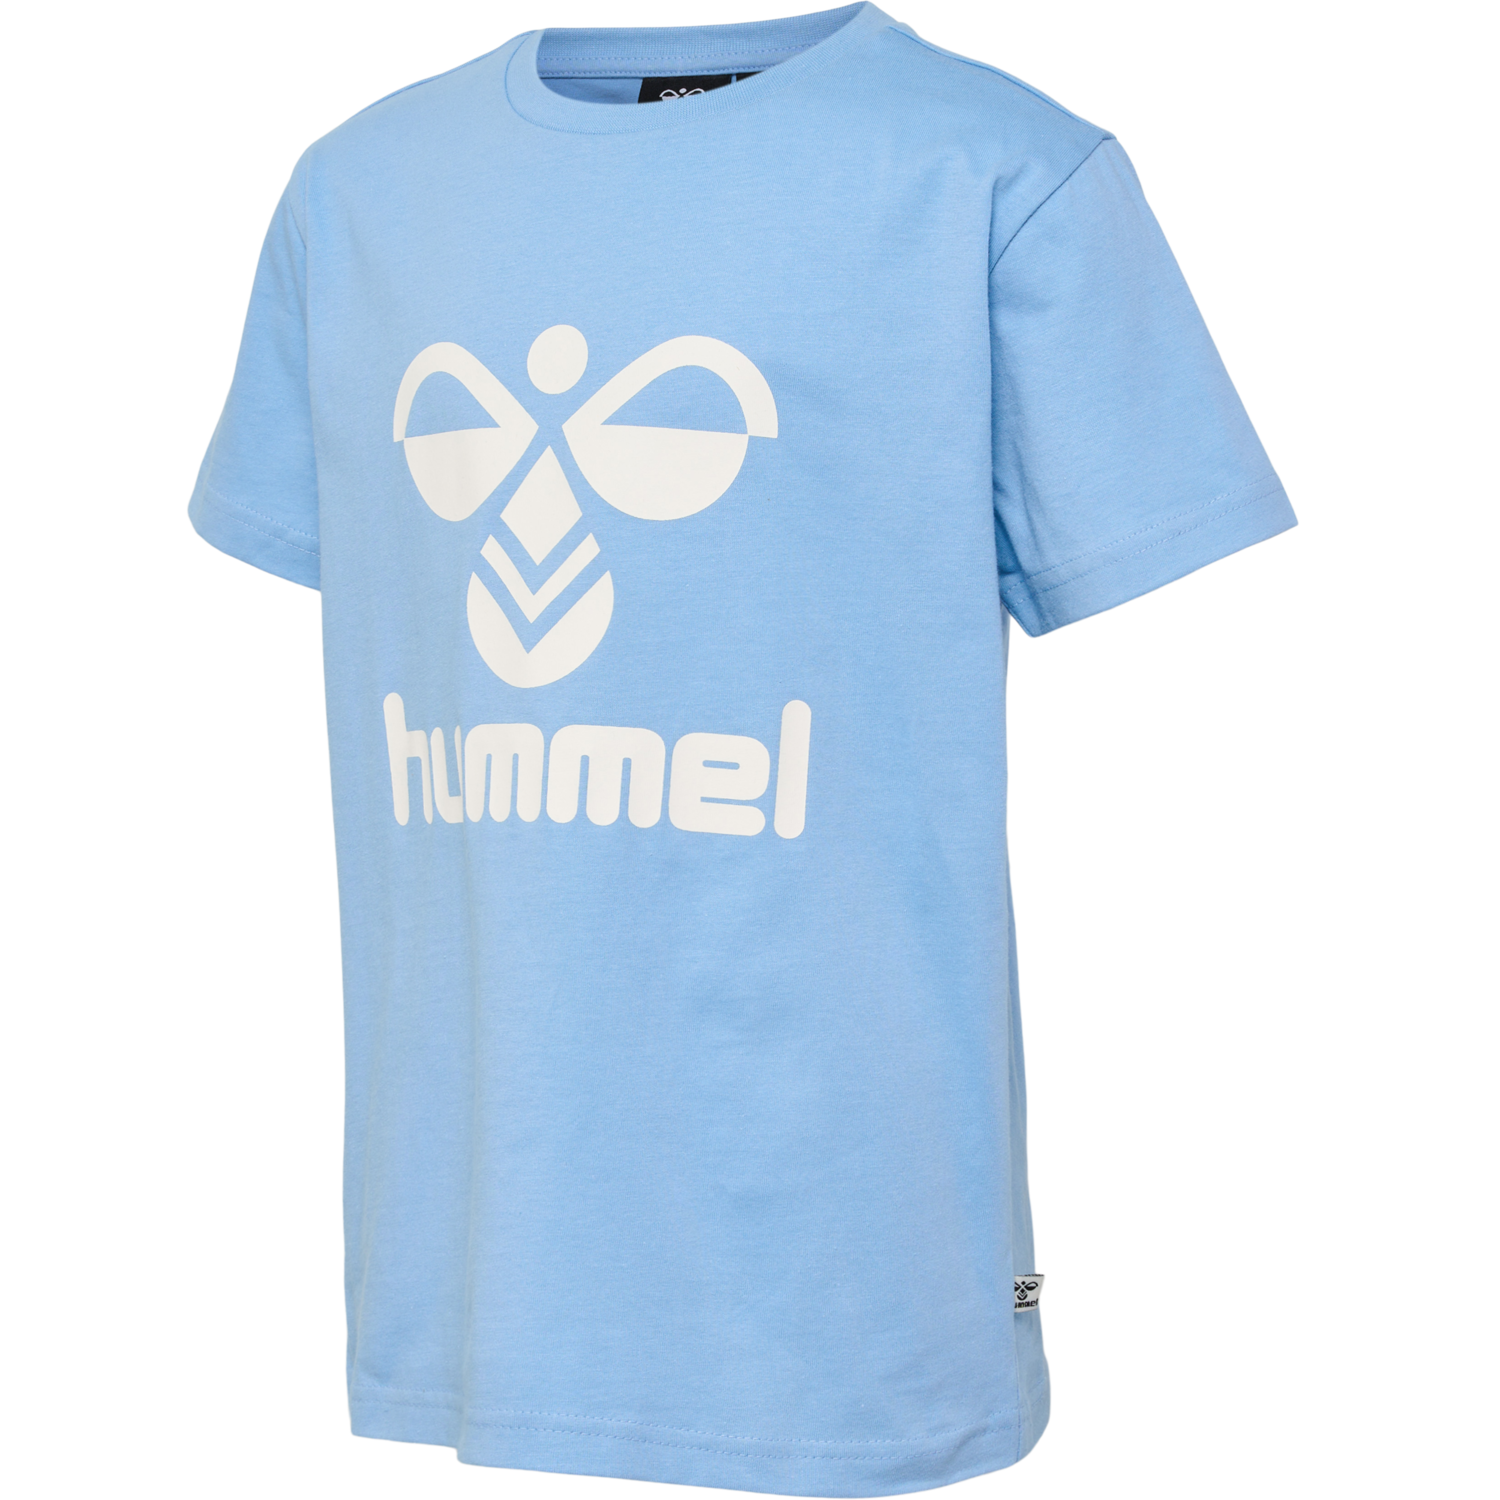 Hummel Hmltres T-Shirt t-skjorte, S/S, AS - AYA barn SPORT